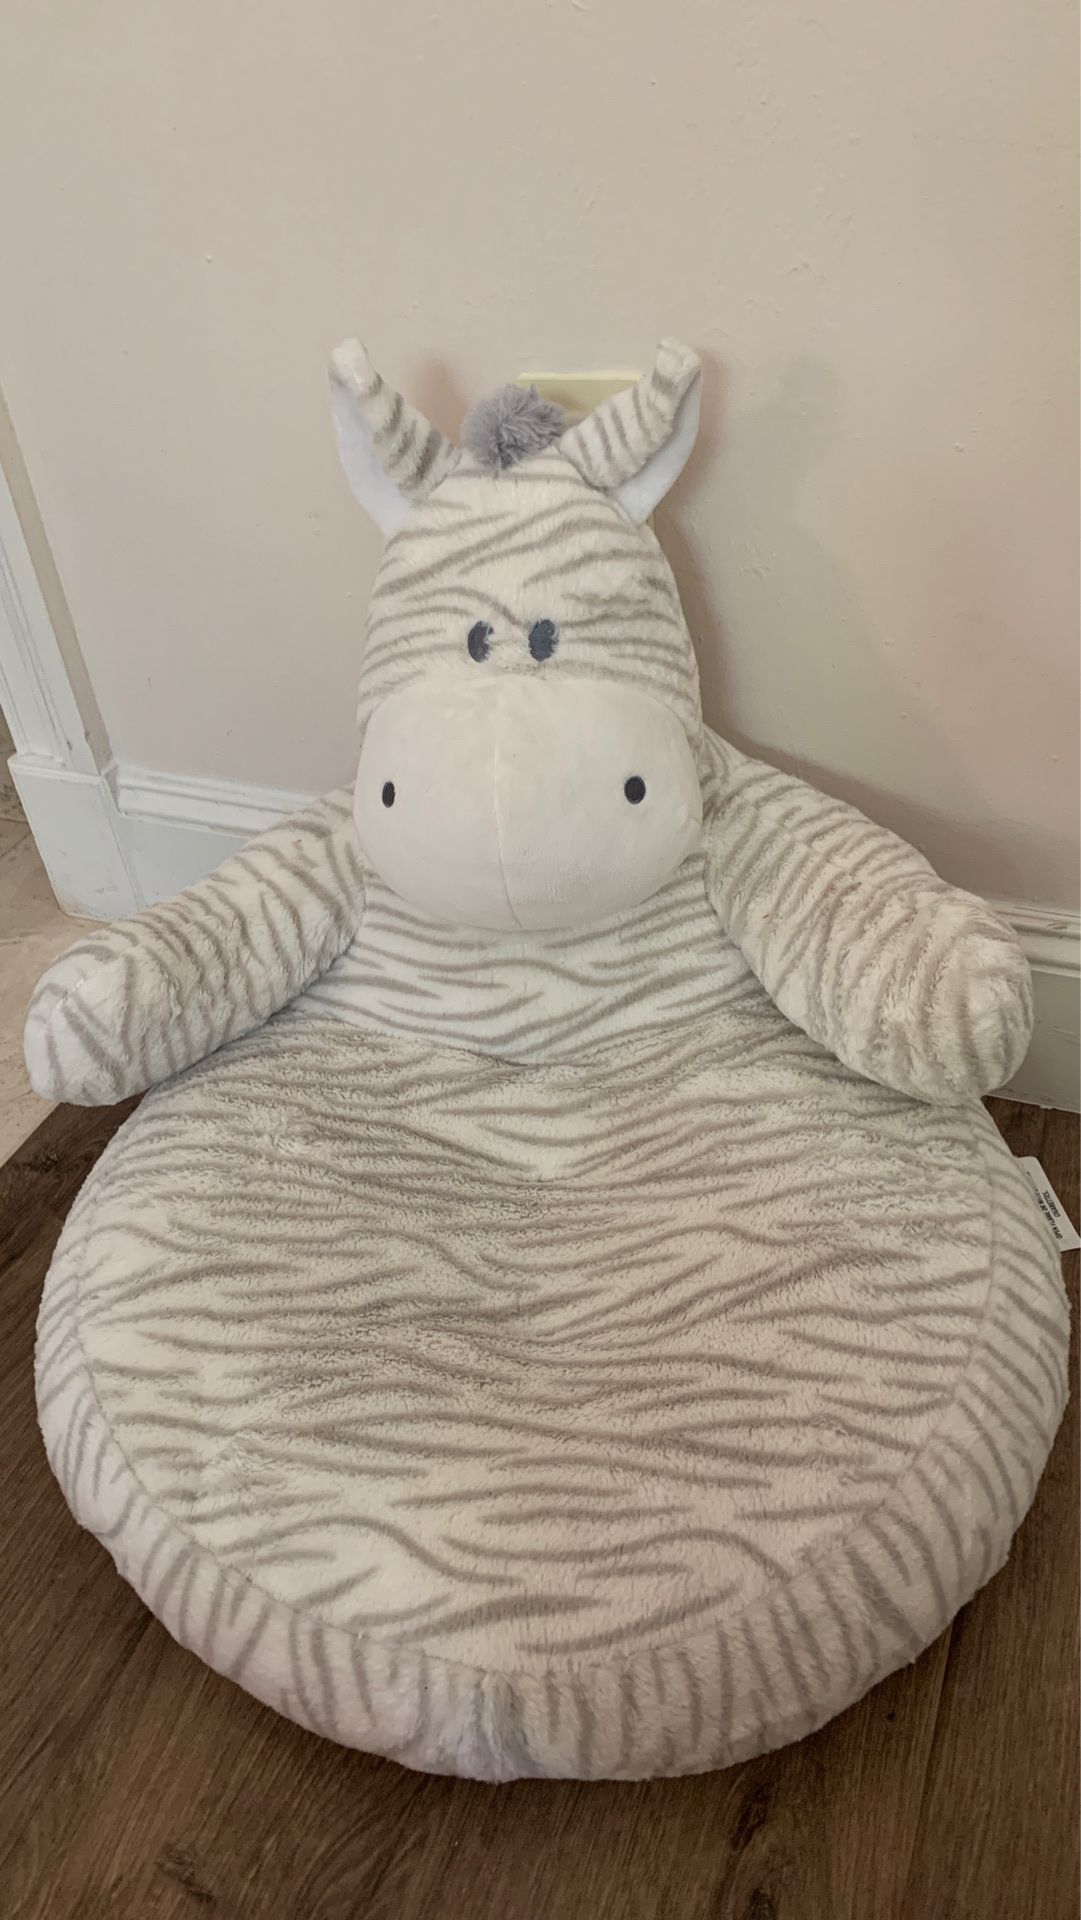 Baby large plush stuffed animal lounge chair